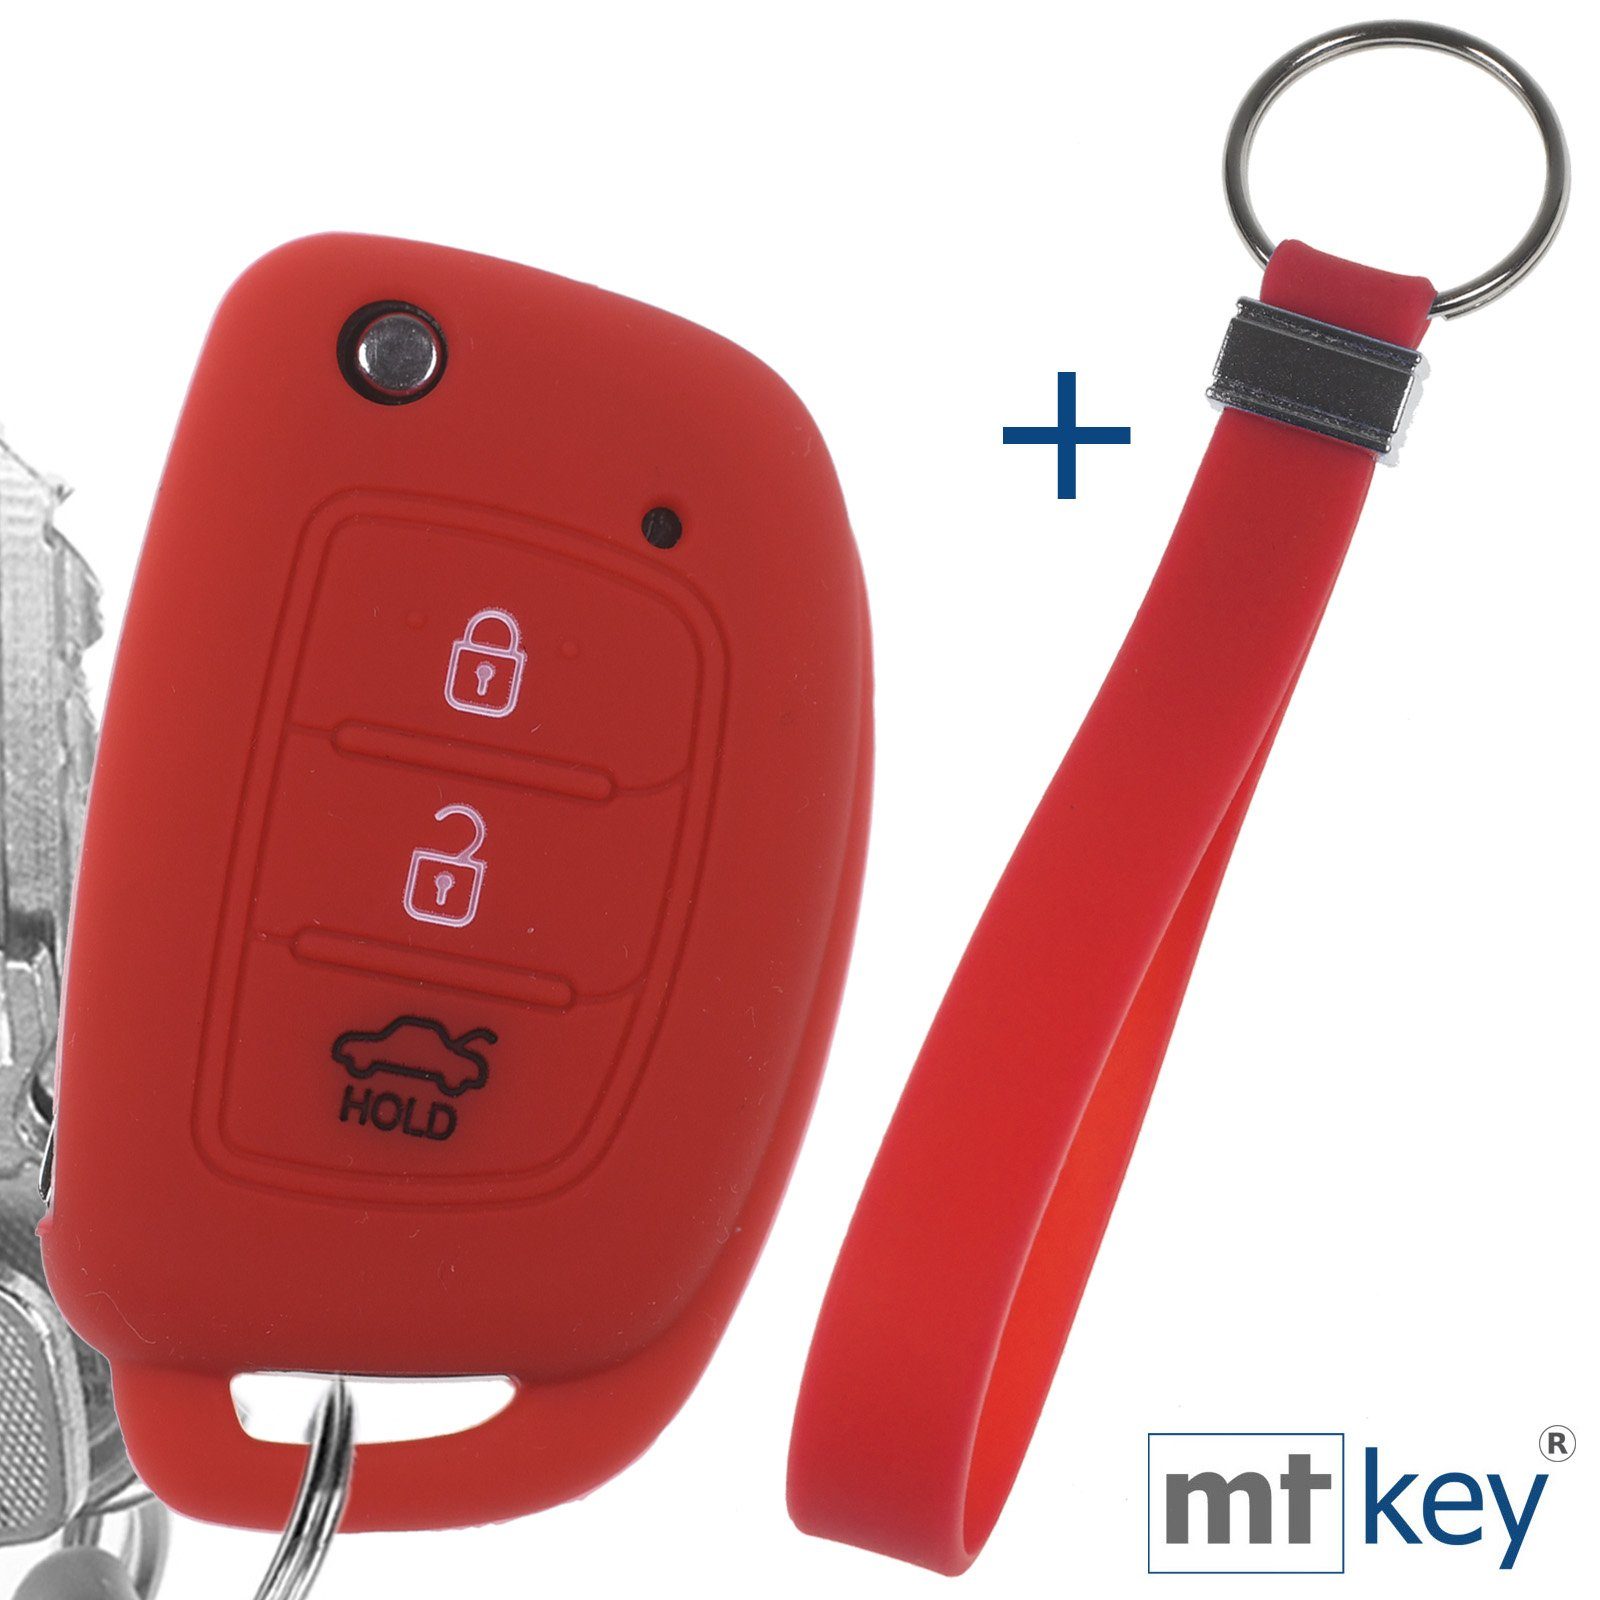 Tucson mit Wabe Knopf Rot im 3 Klappschlüssel mt-key Schlüsselband, i20 Design für i40 Hyundai ix25 Accent Schlüsseltasche Silikon Schutzhülle i10 ix35 Autoschlüssel